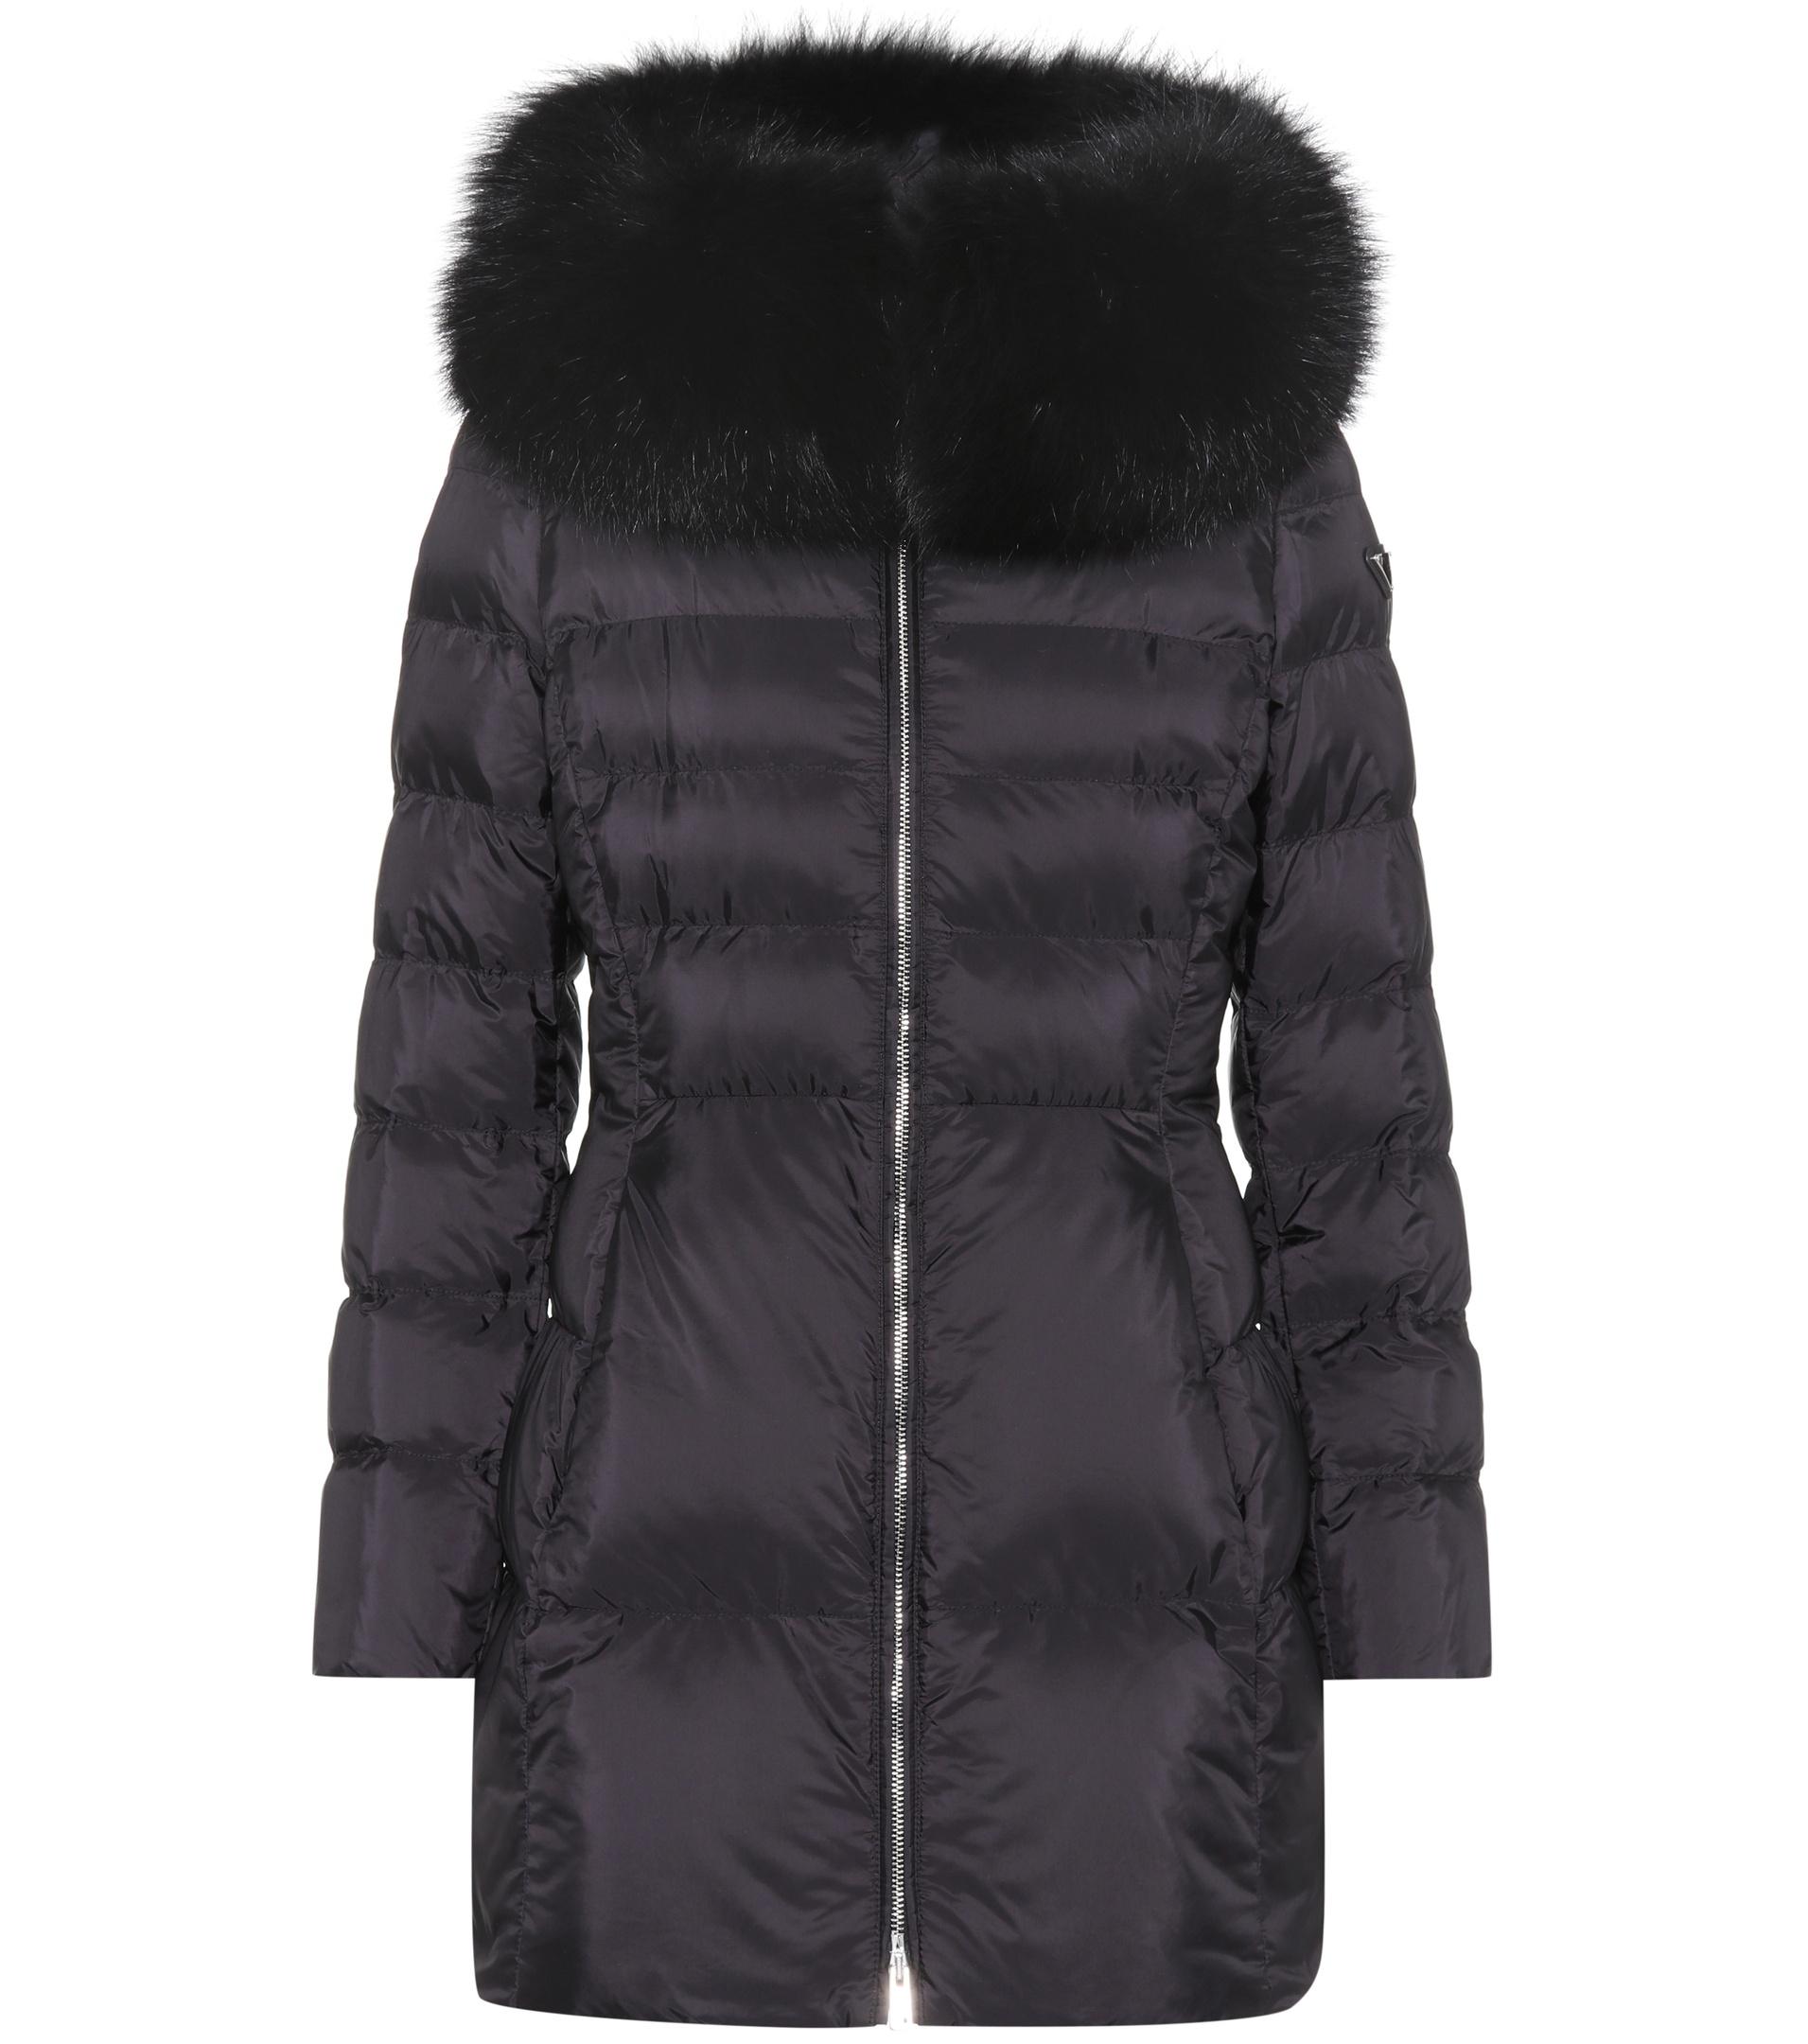 Prada Fur-trimmed Down Coat in Black - Lyst